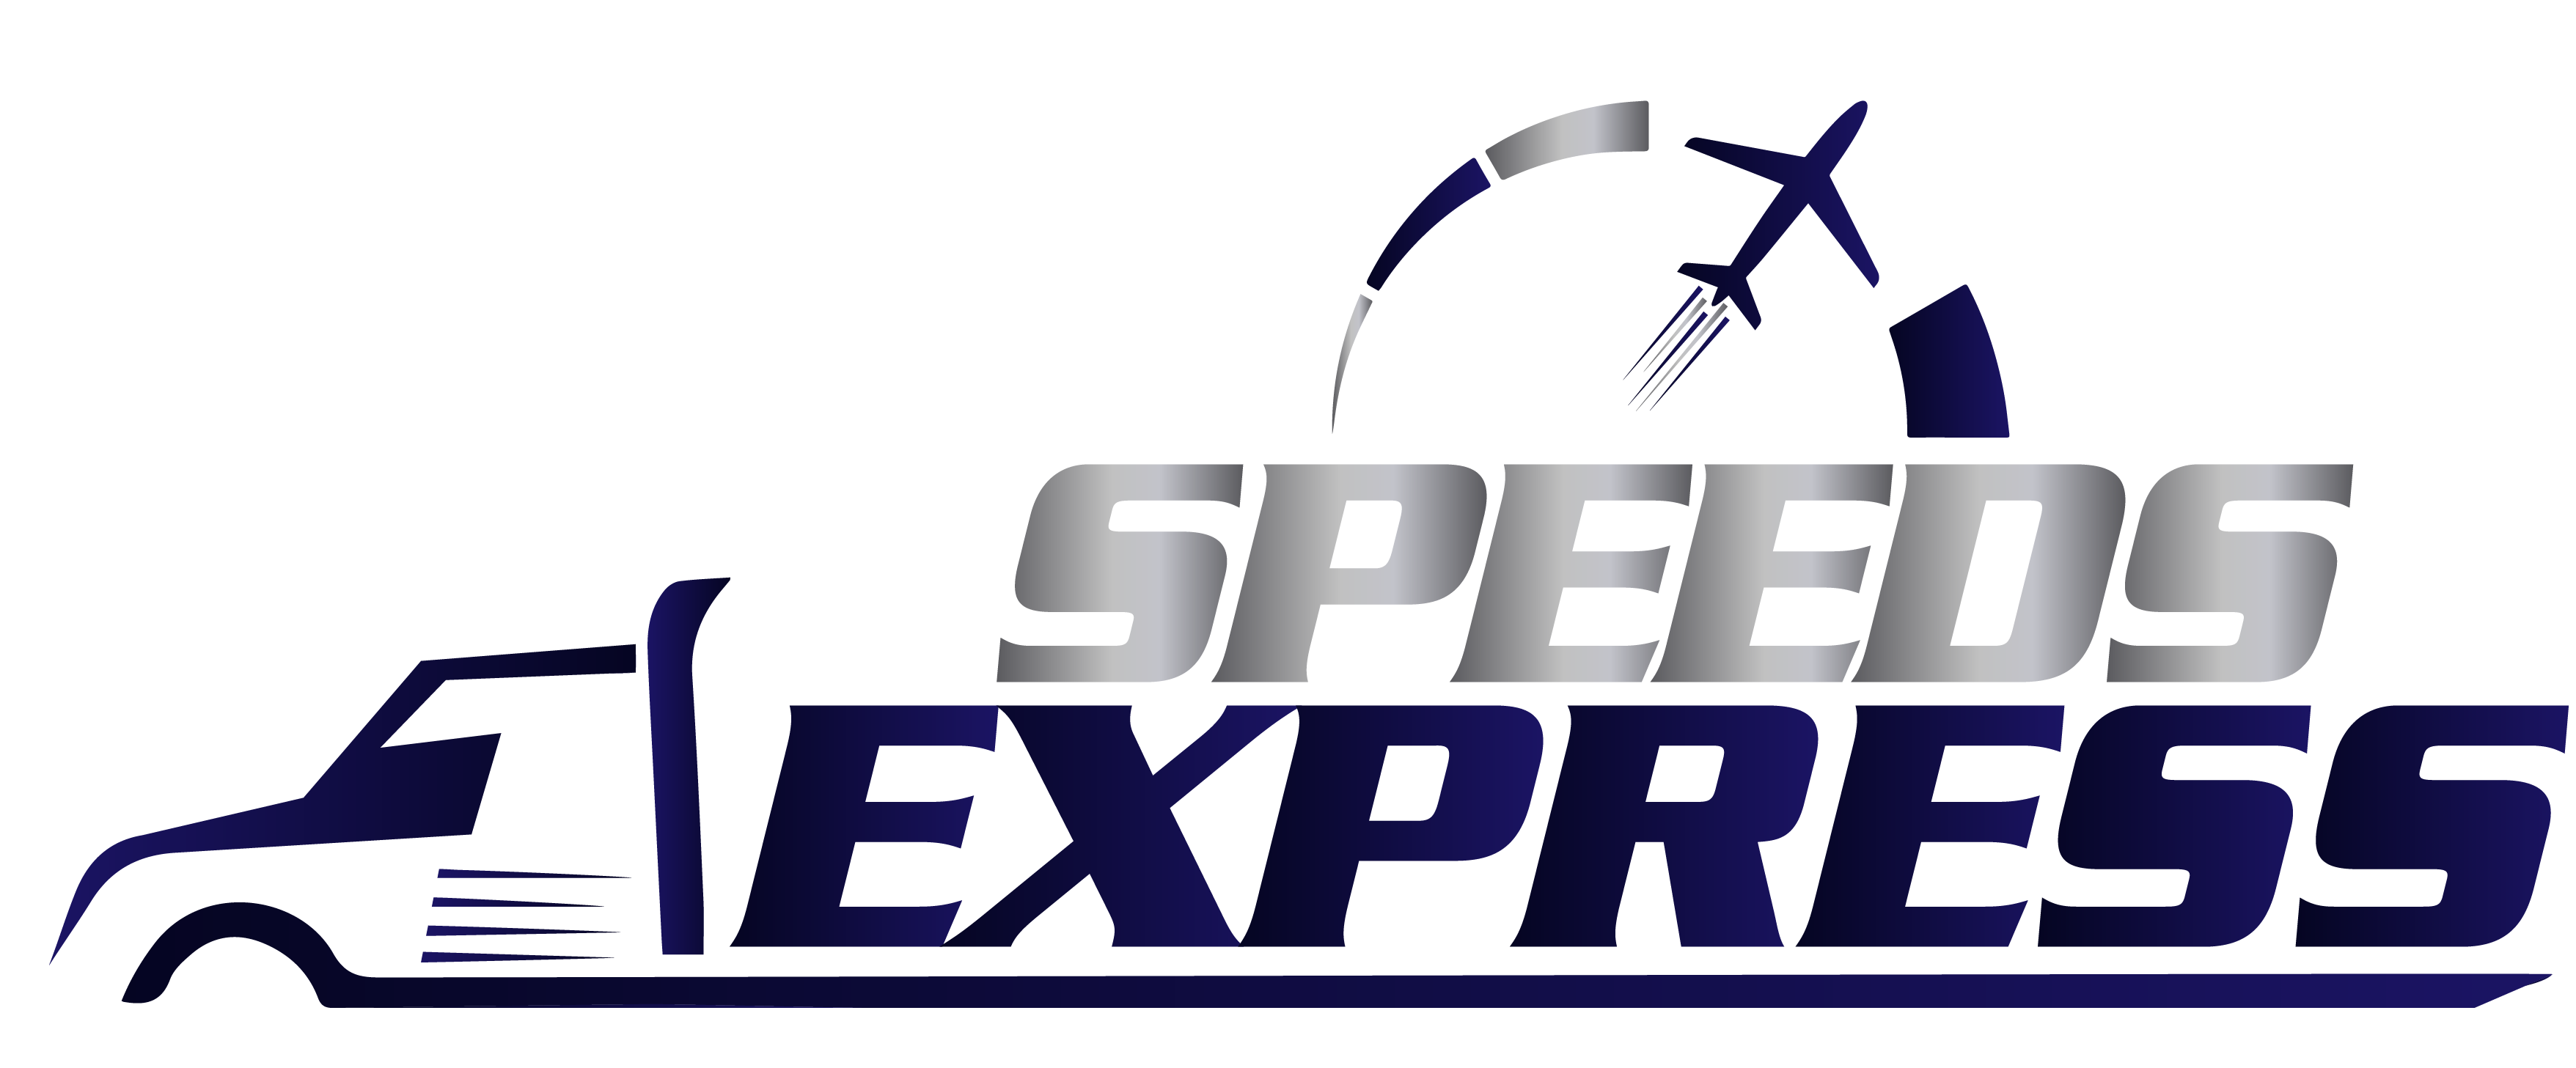 speedsexpress.com